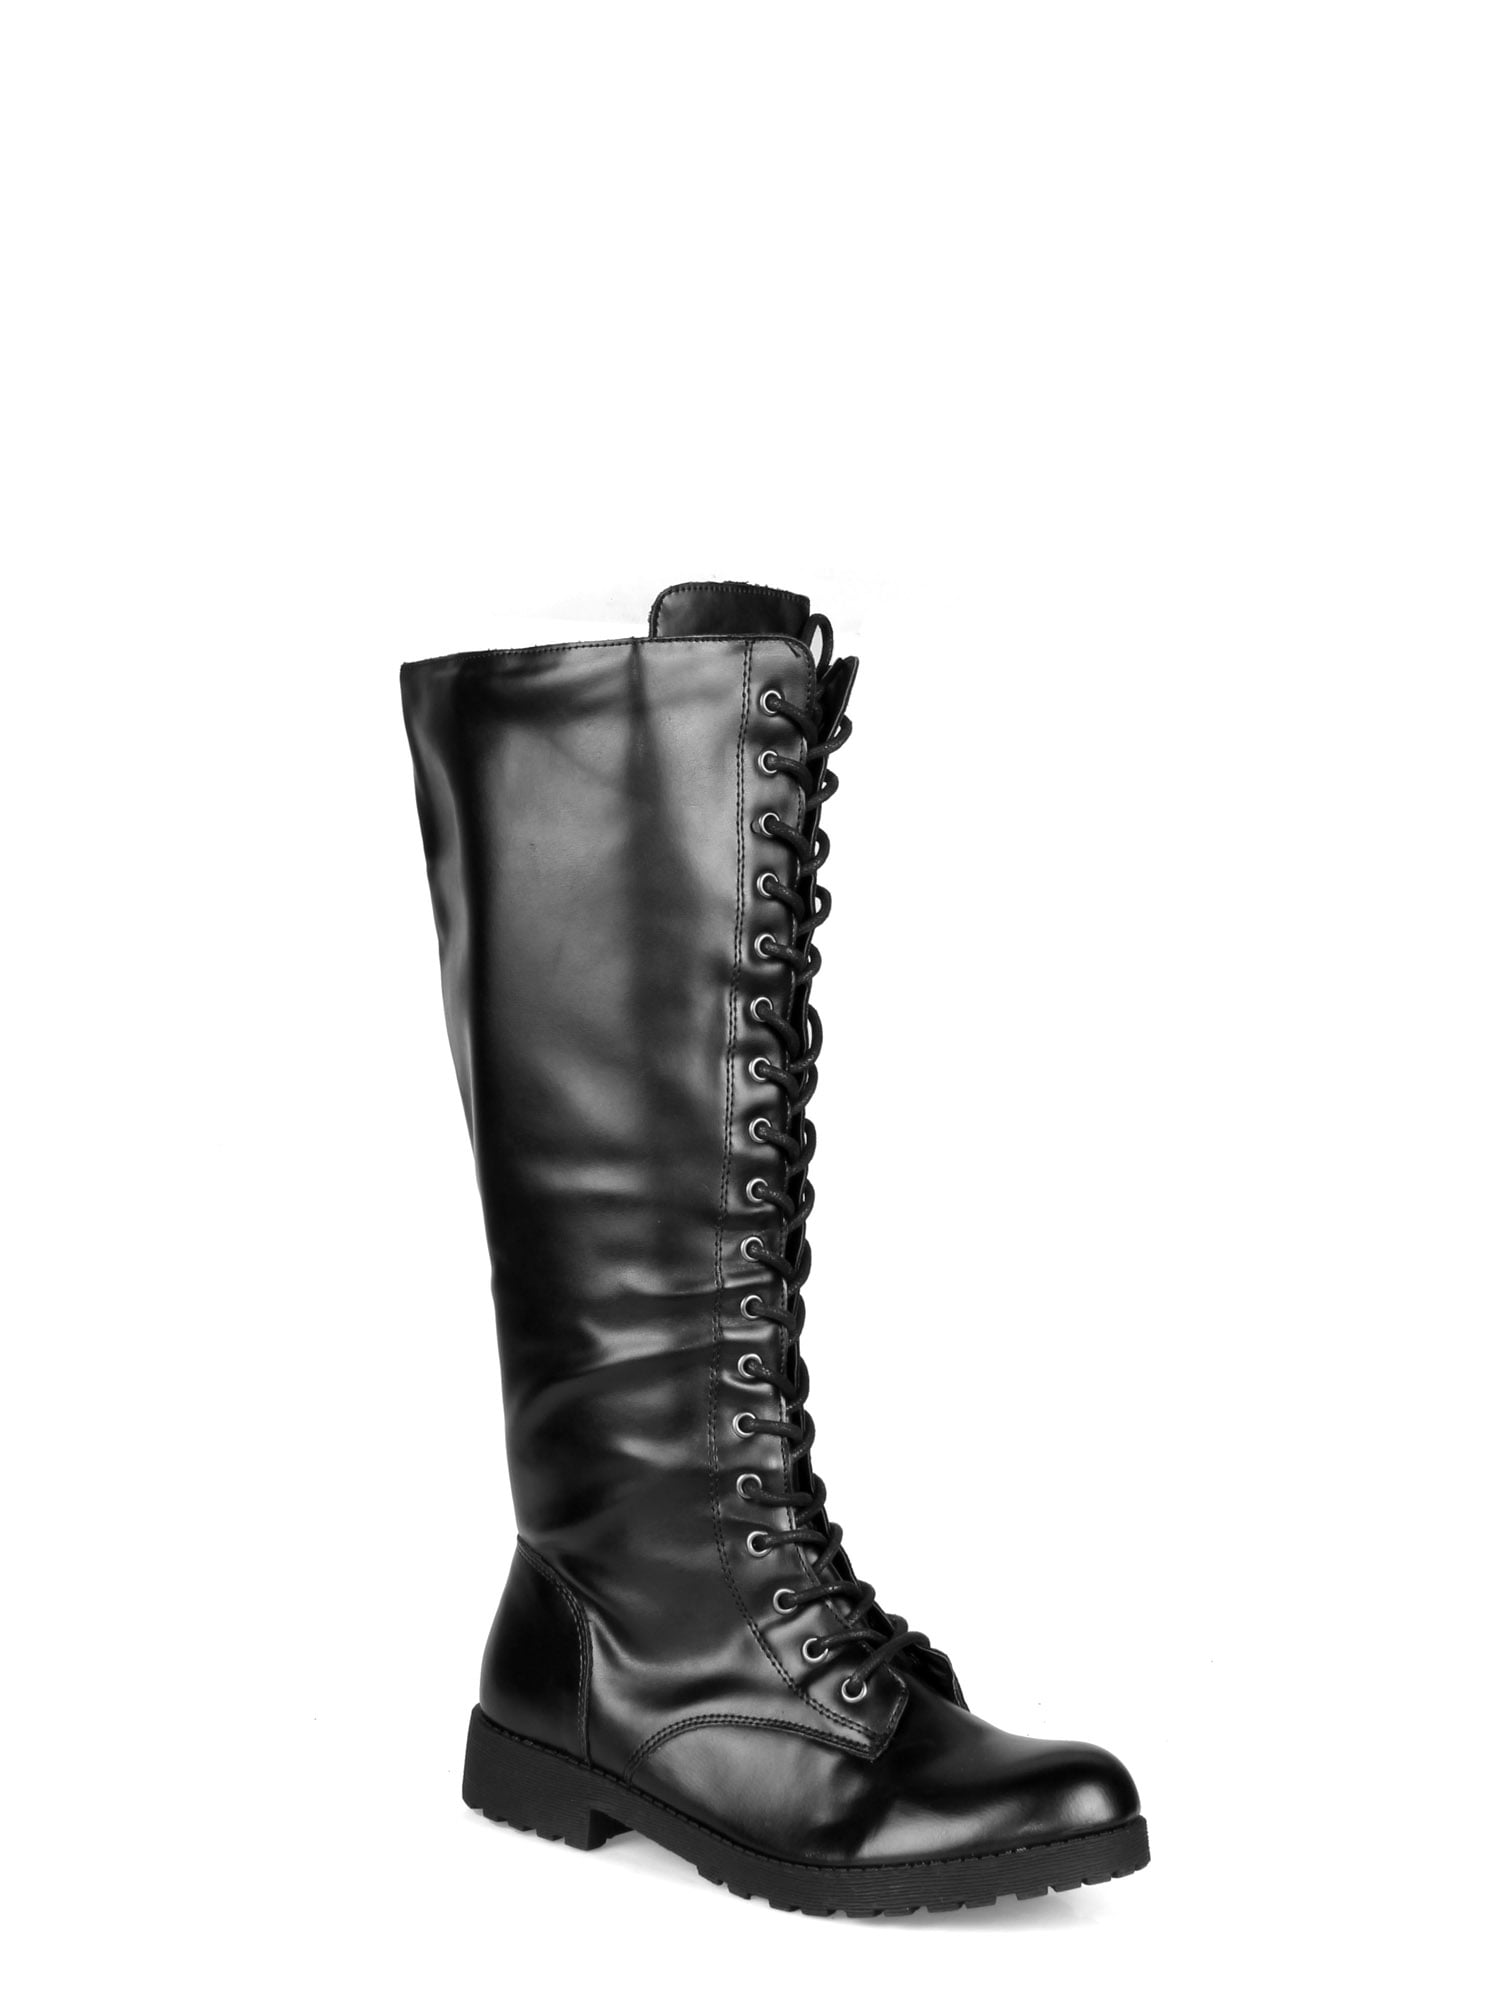 Shoelala Lace-up Women's Combat Boots in Black - Walmart.com